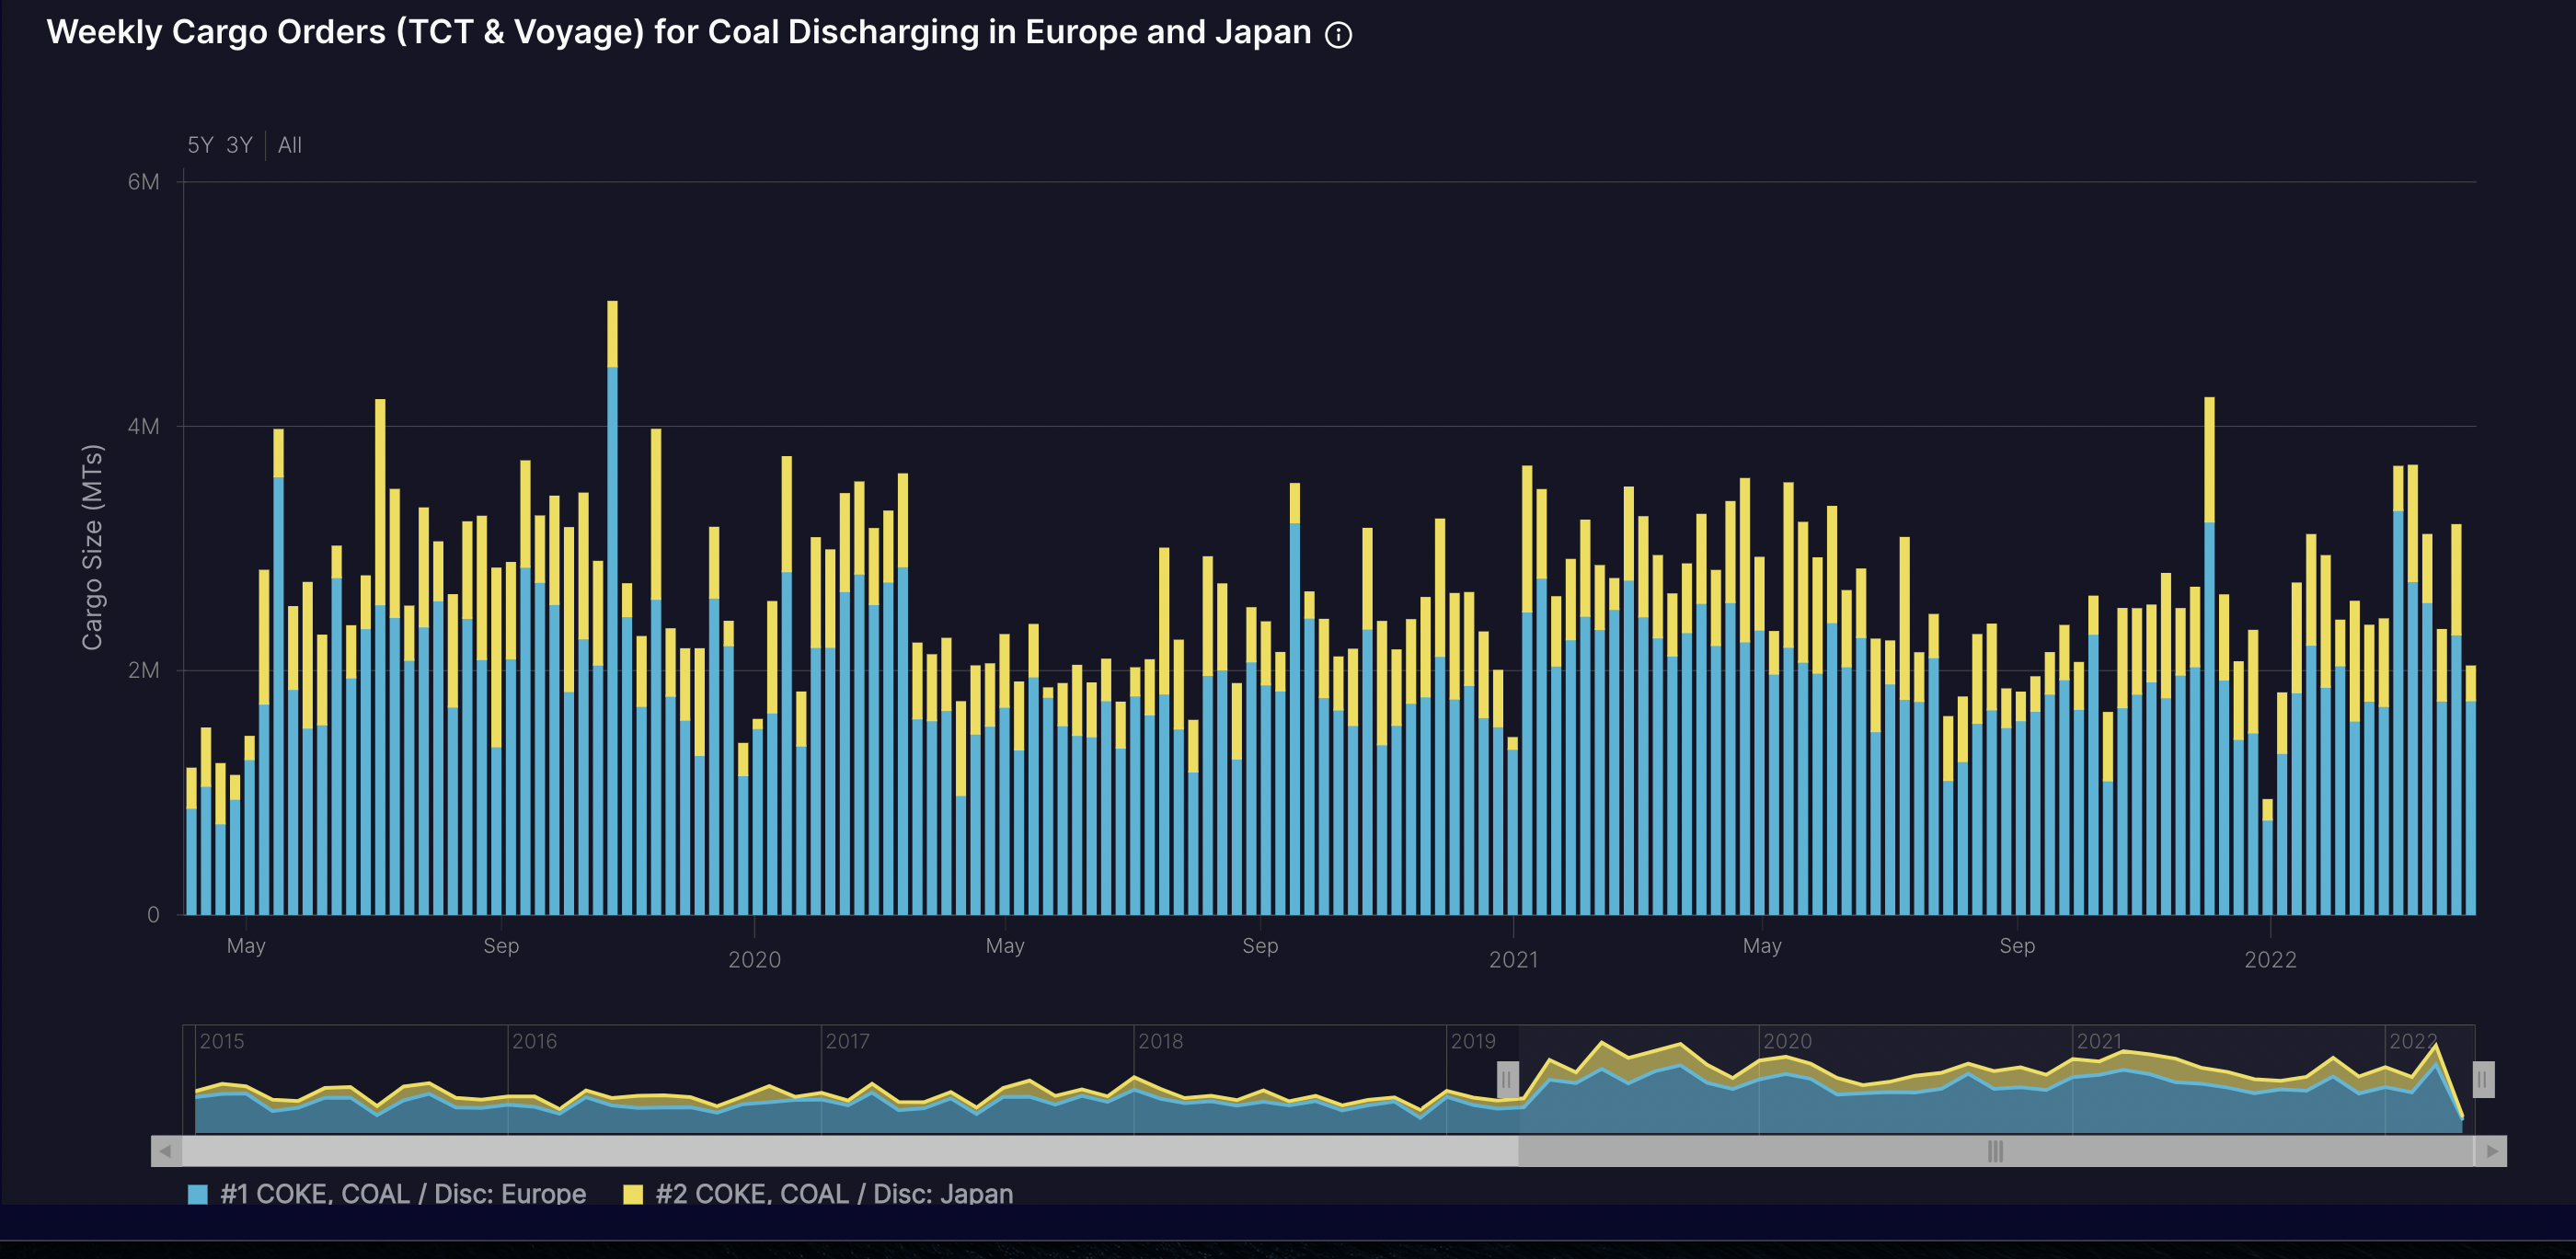 Cargo orders for coal discharging Europe and Japan